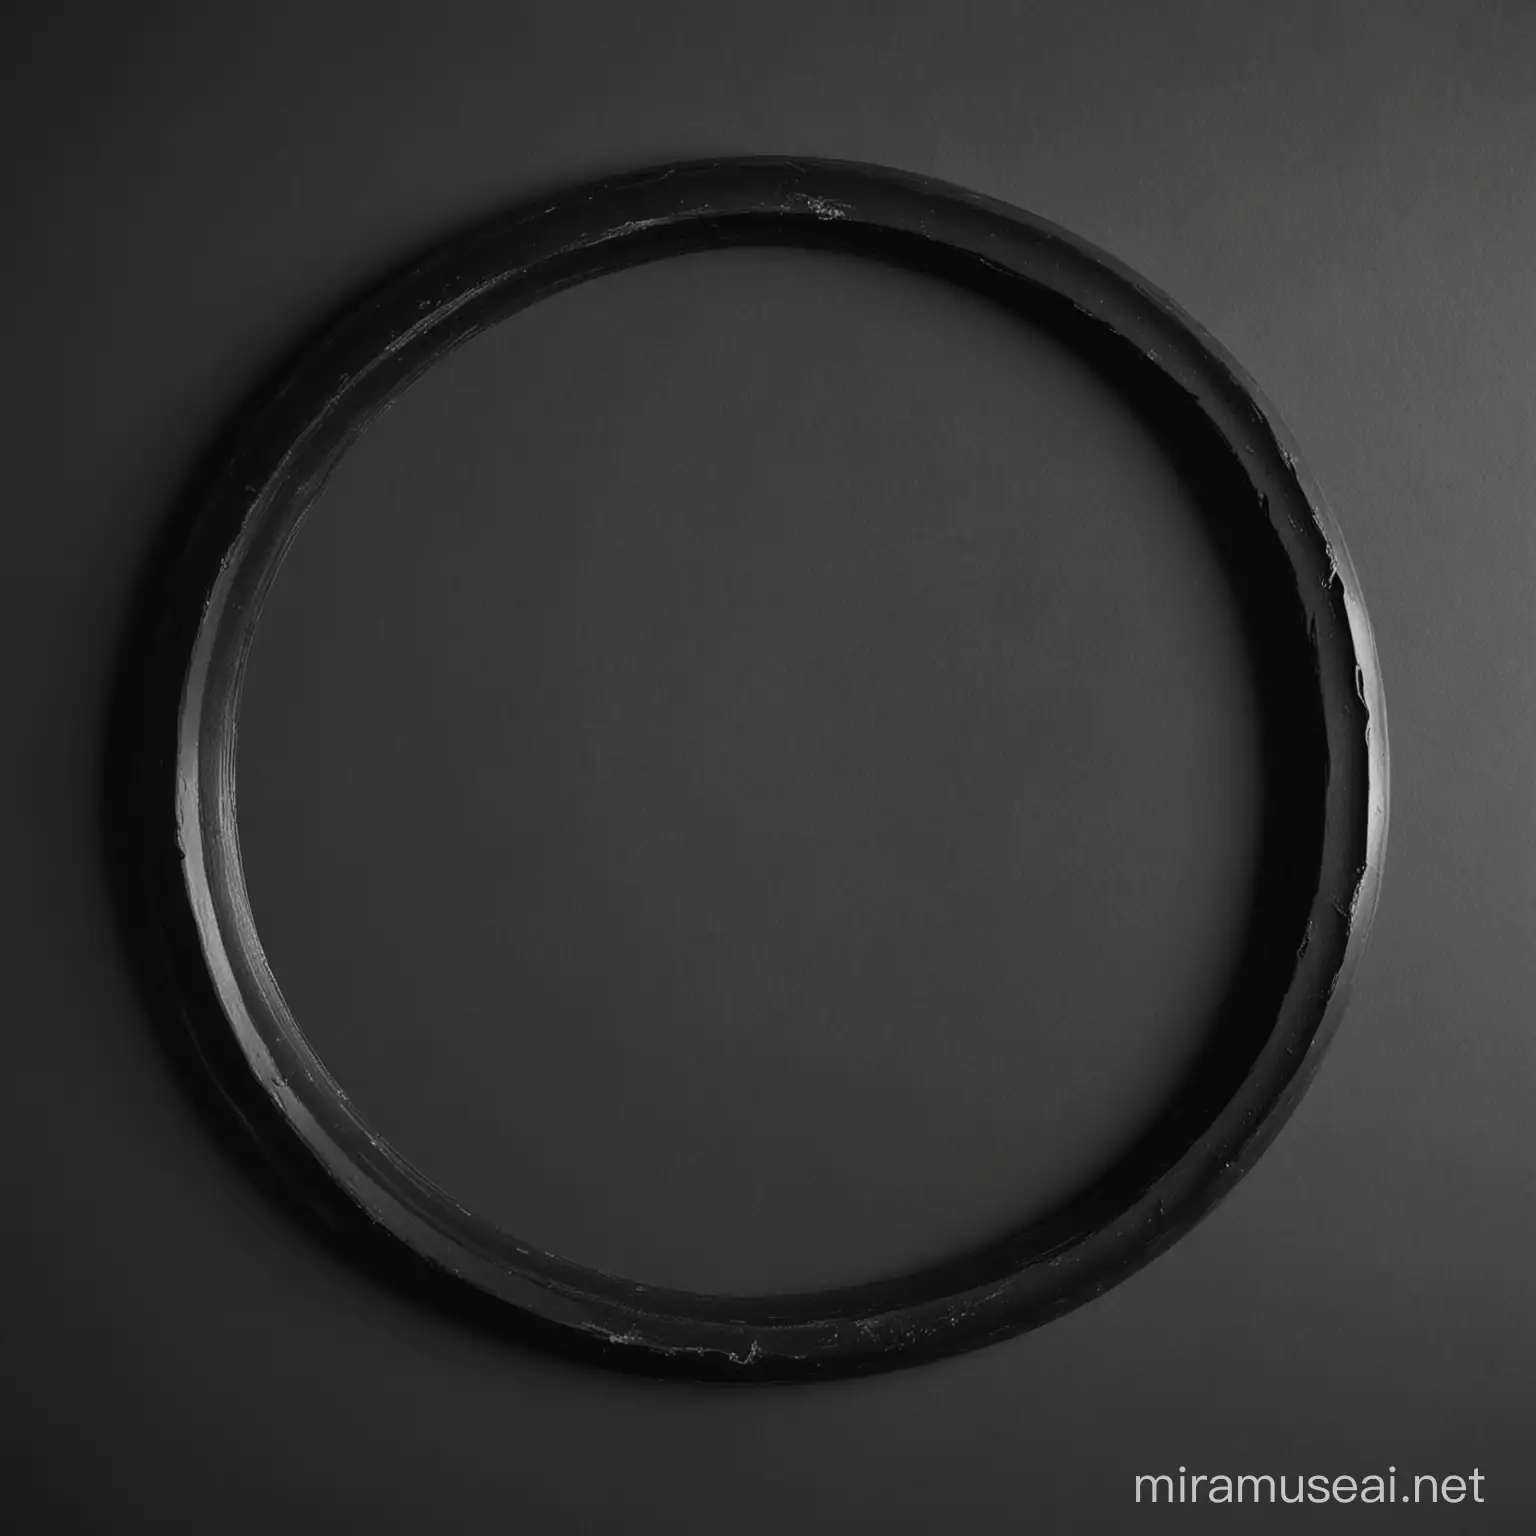 A black circle frame 